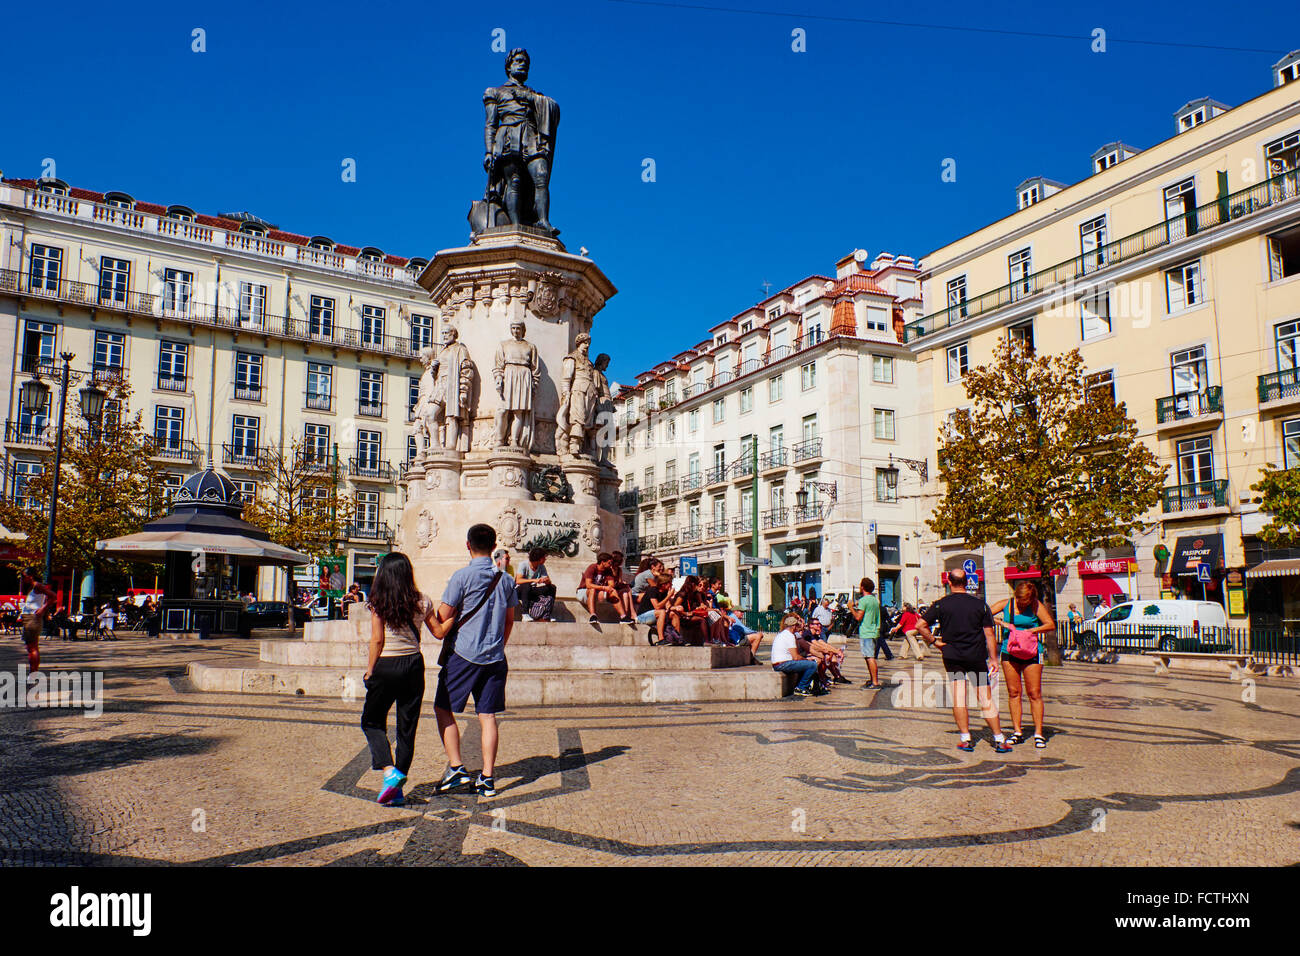 Portugal Lisbon Bairro alto Luis de Camoes square Stock Photo